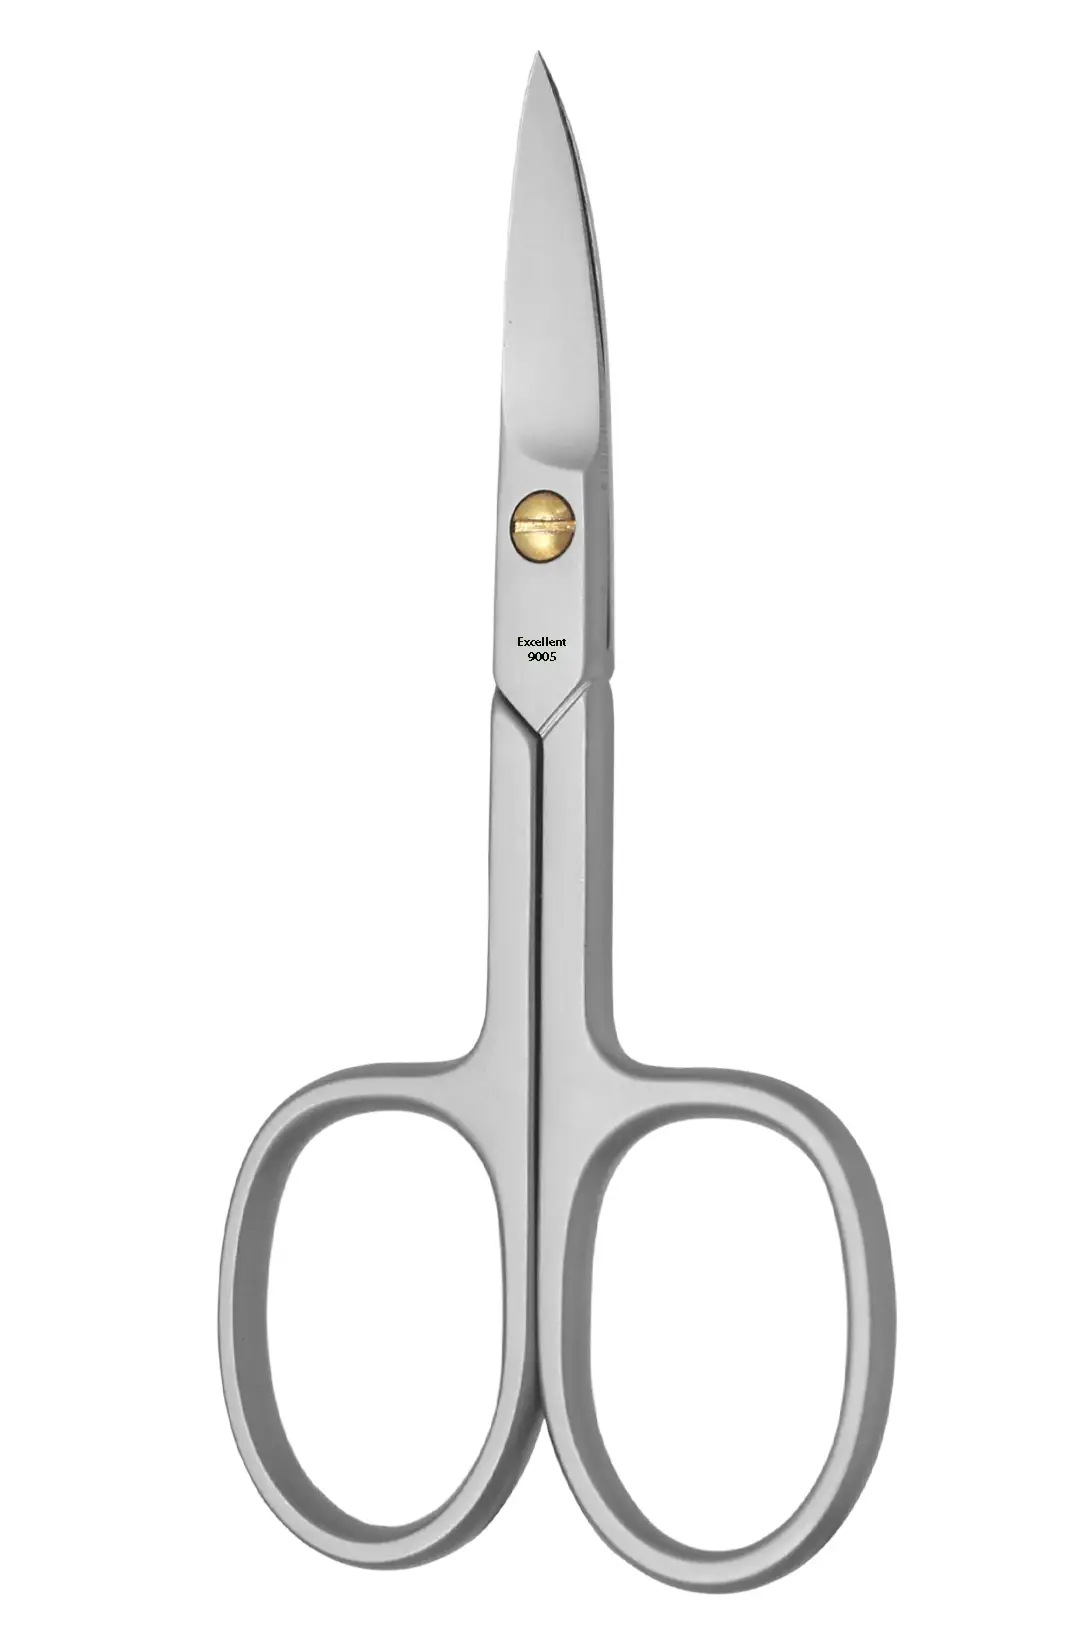 Excellent Nail Scissors 9.0 cm curved